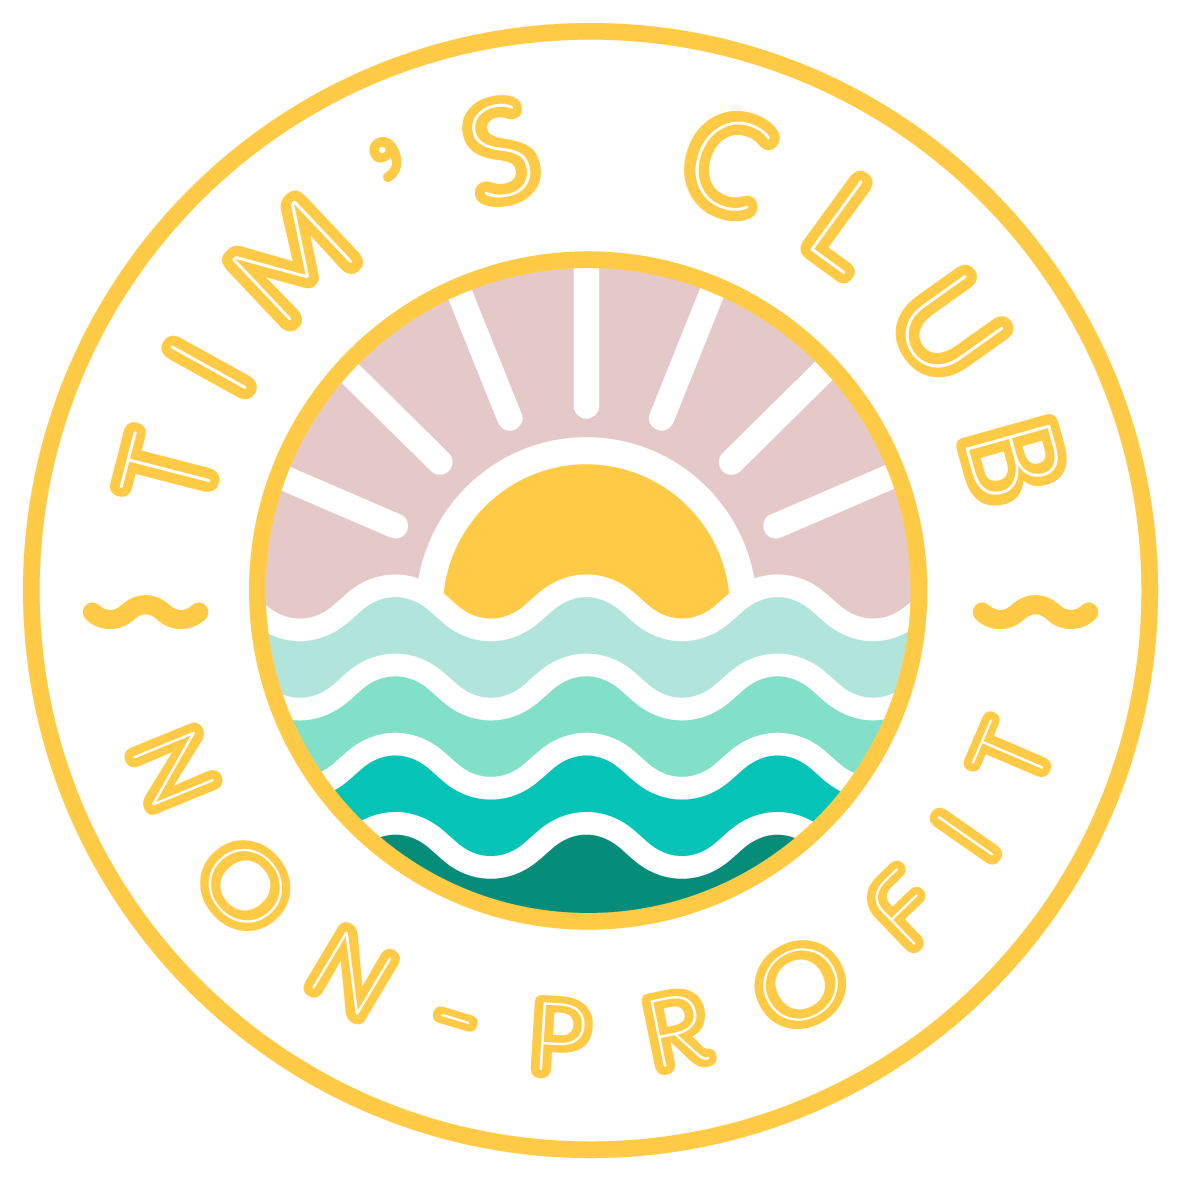 Tim's Club